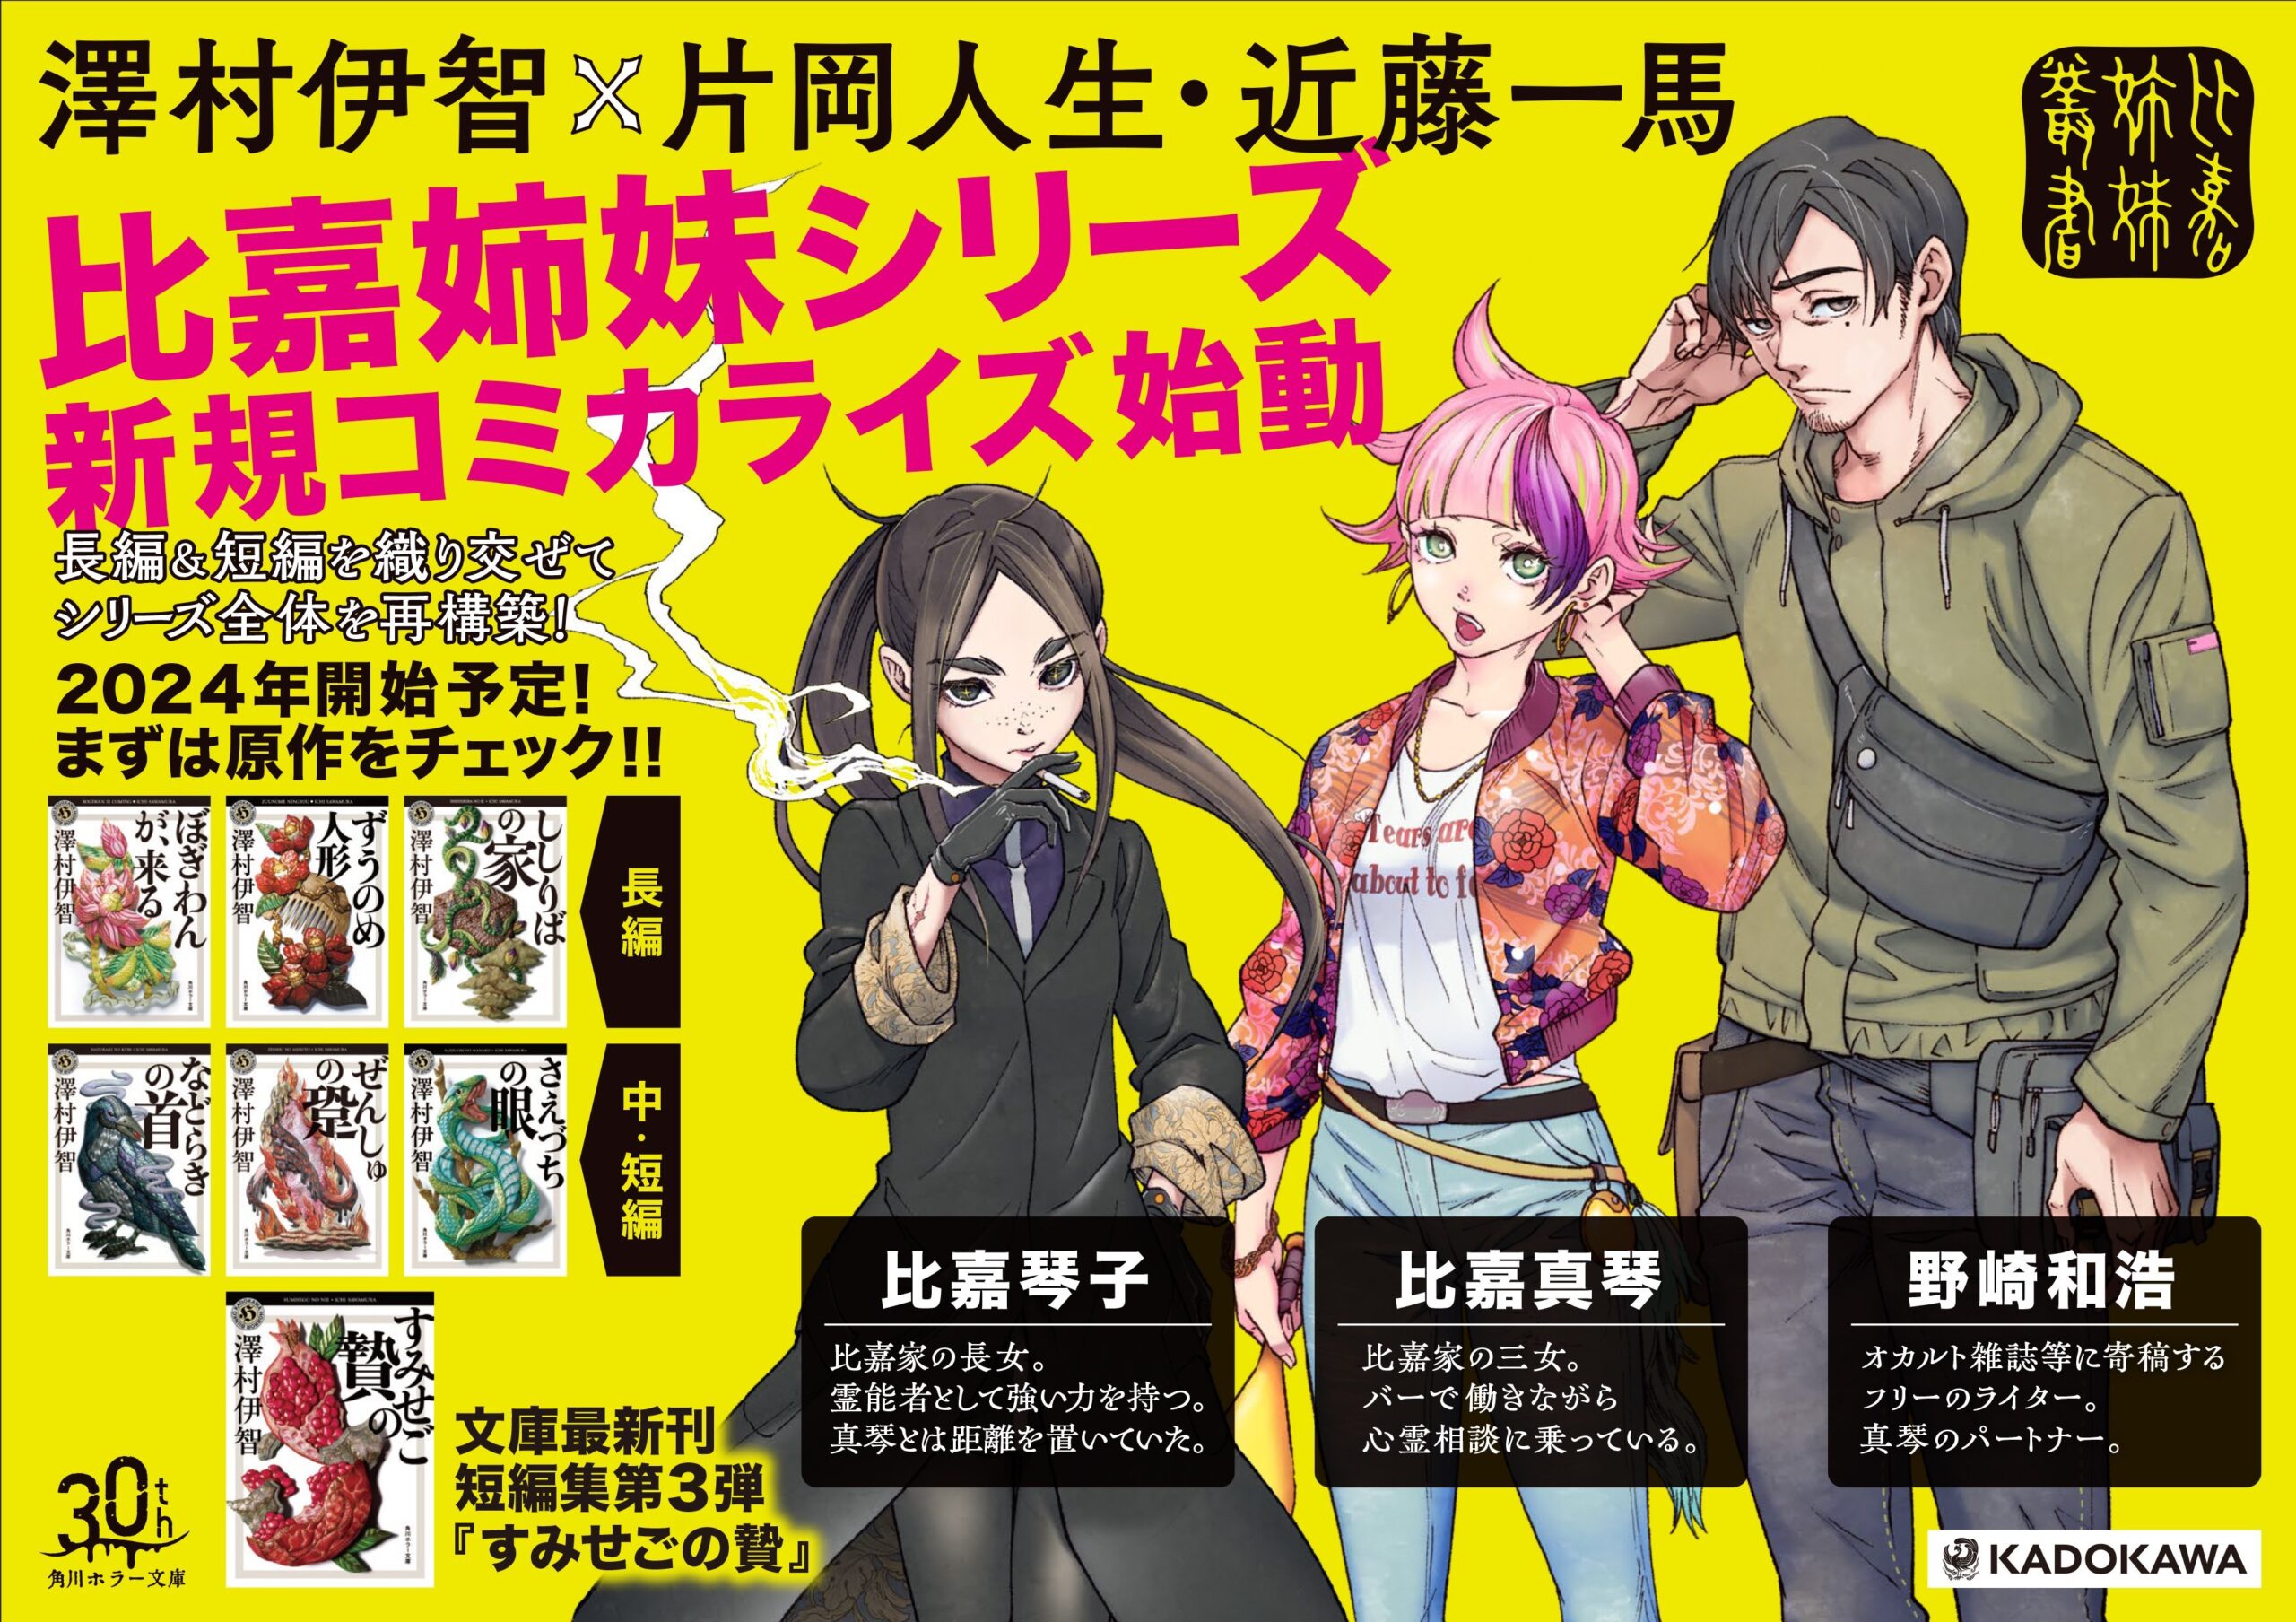 Higa Shimai Manga Announcement